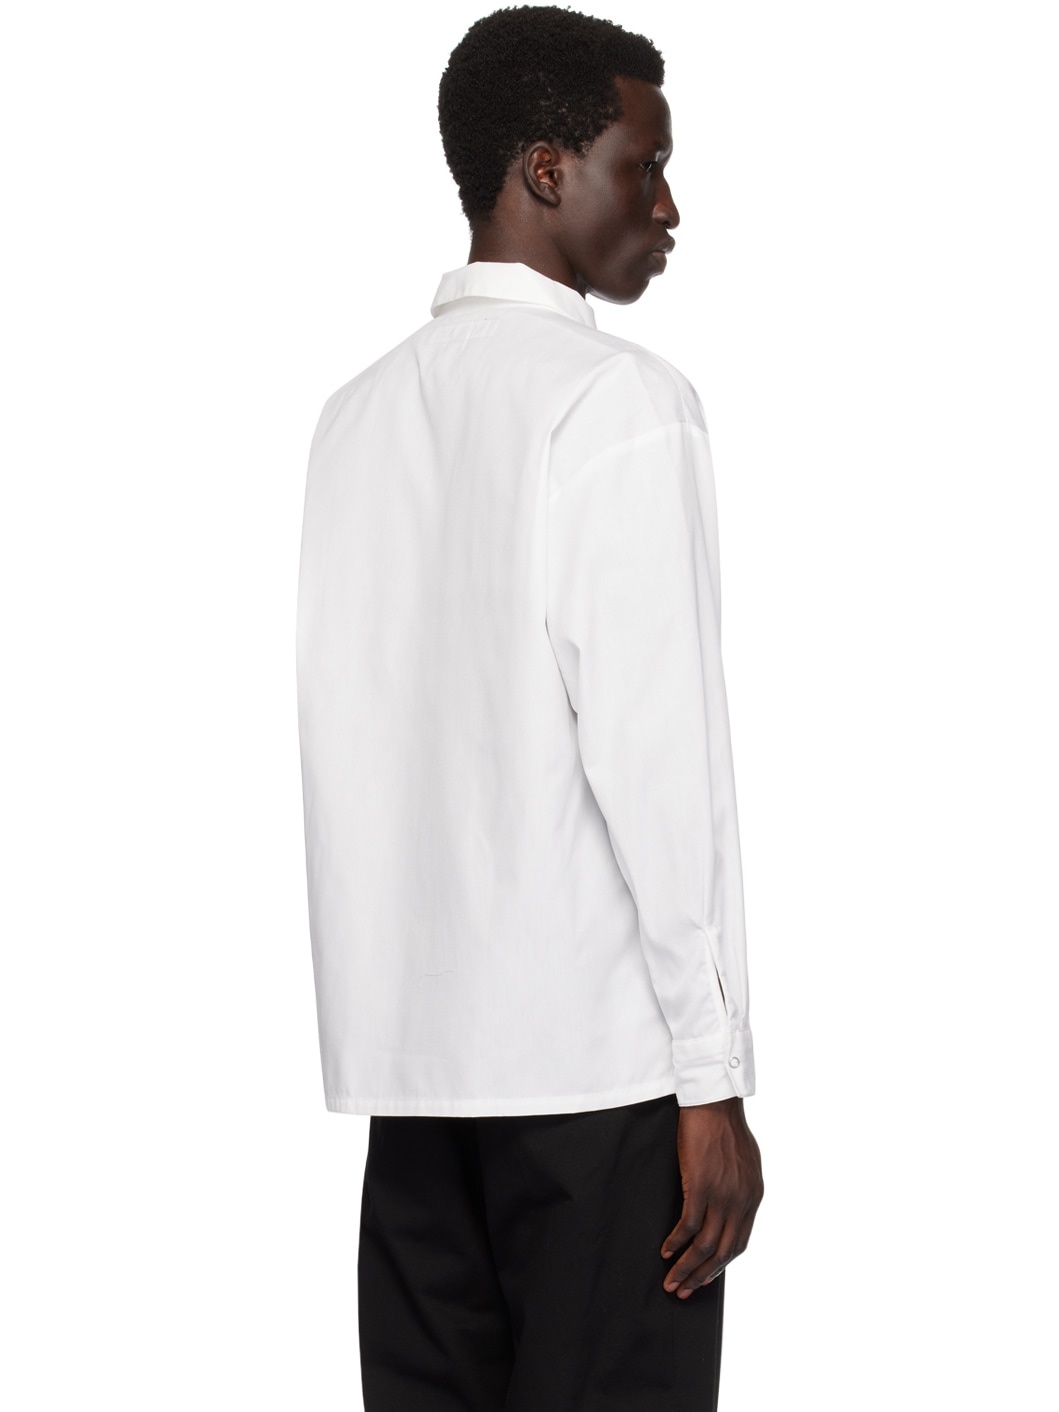 White Striped Shirt - 3